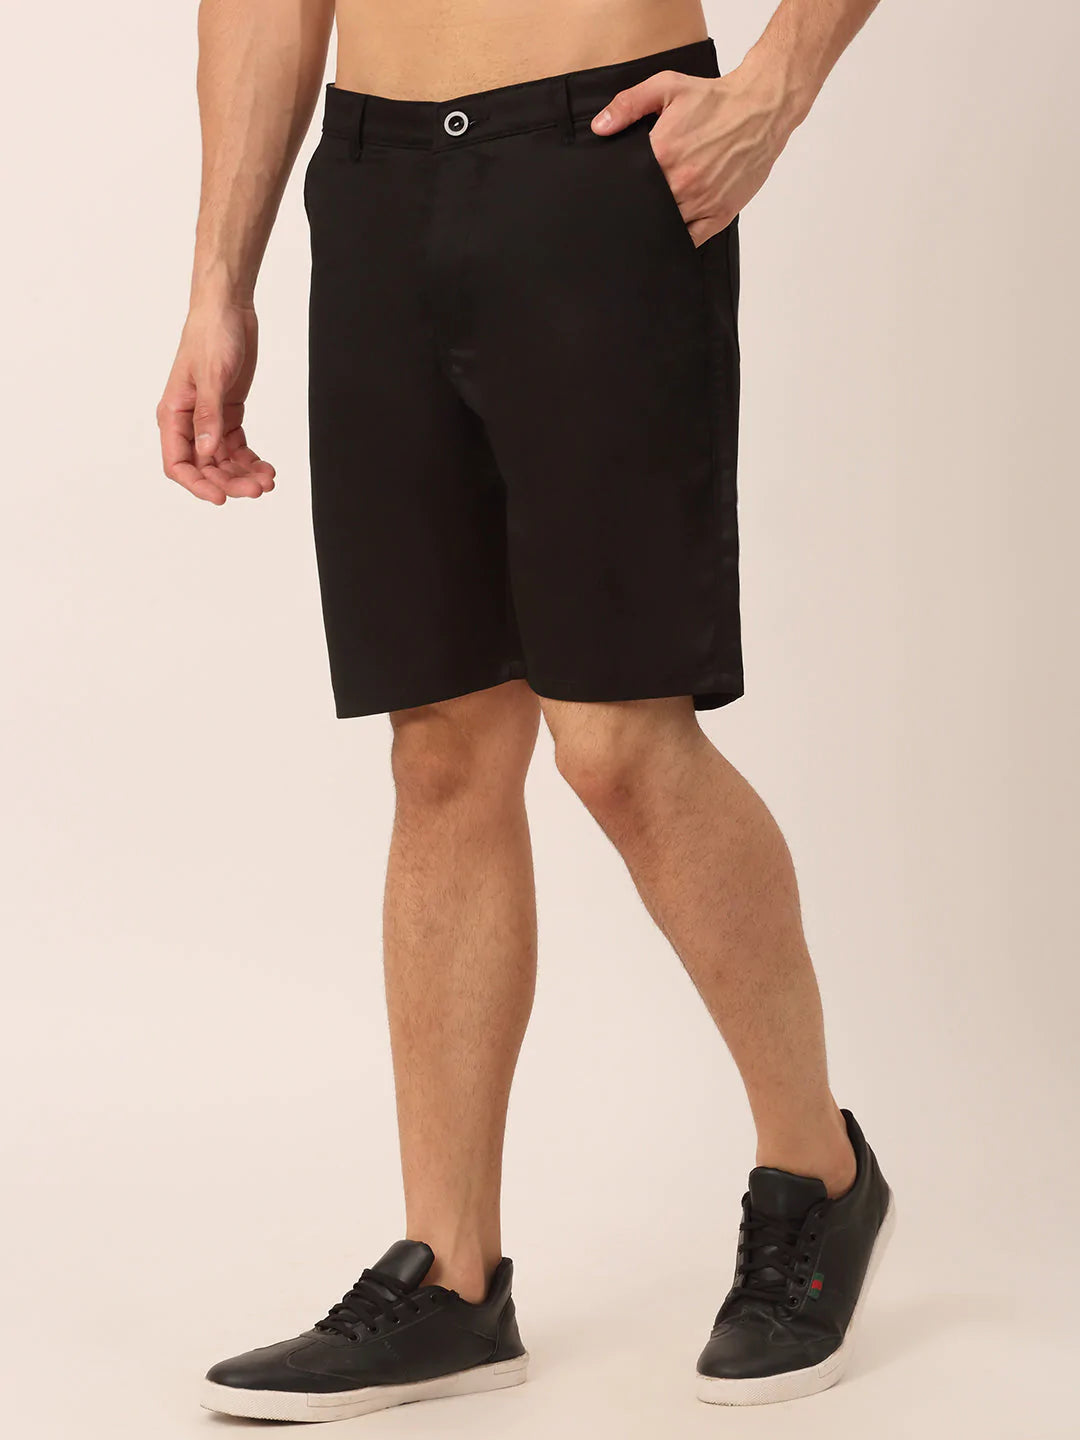 Jainish Men's Casual Cotton Solid Shorts ( SGP 153 Black )